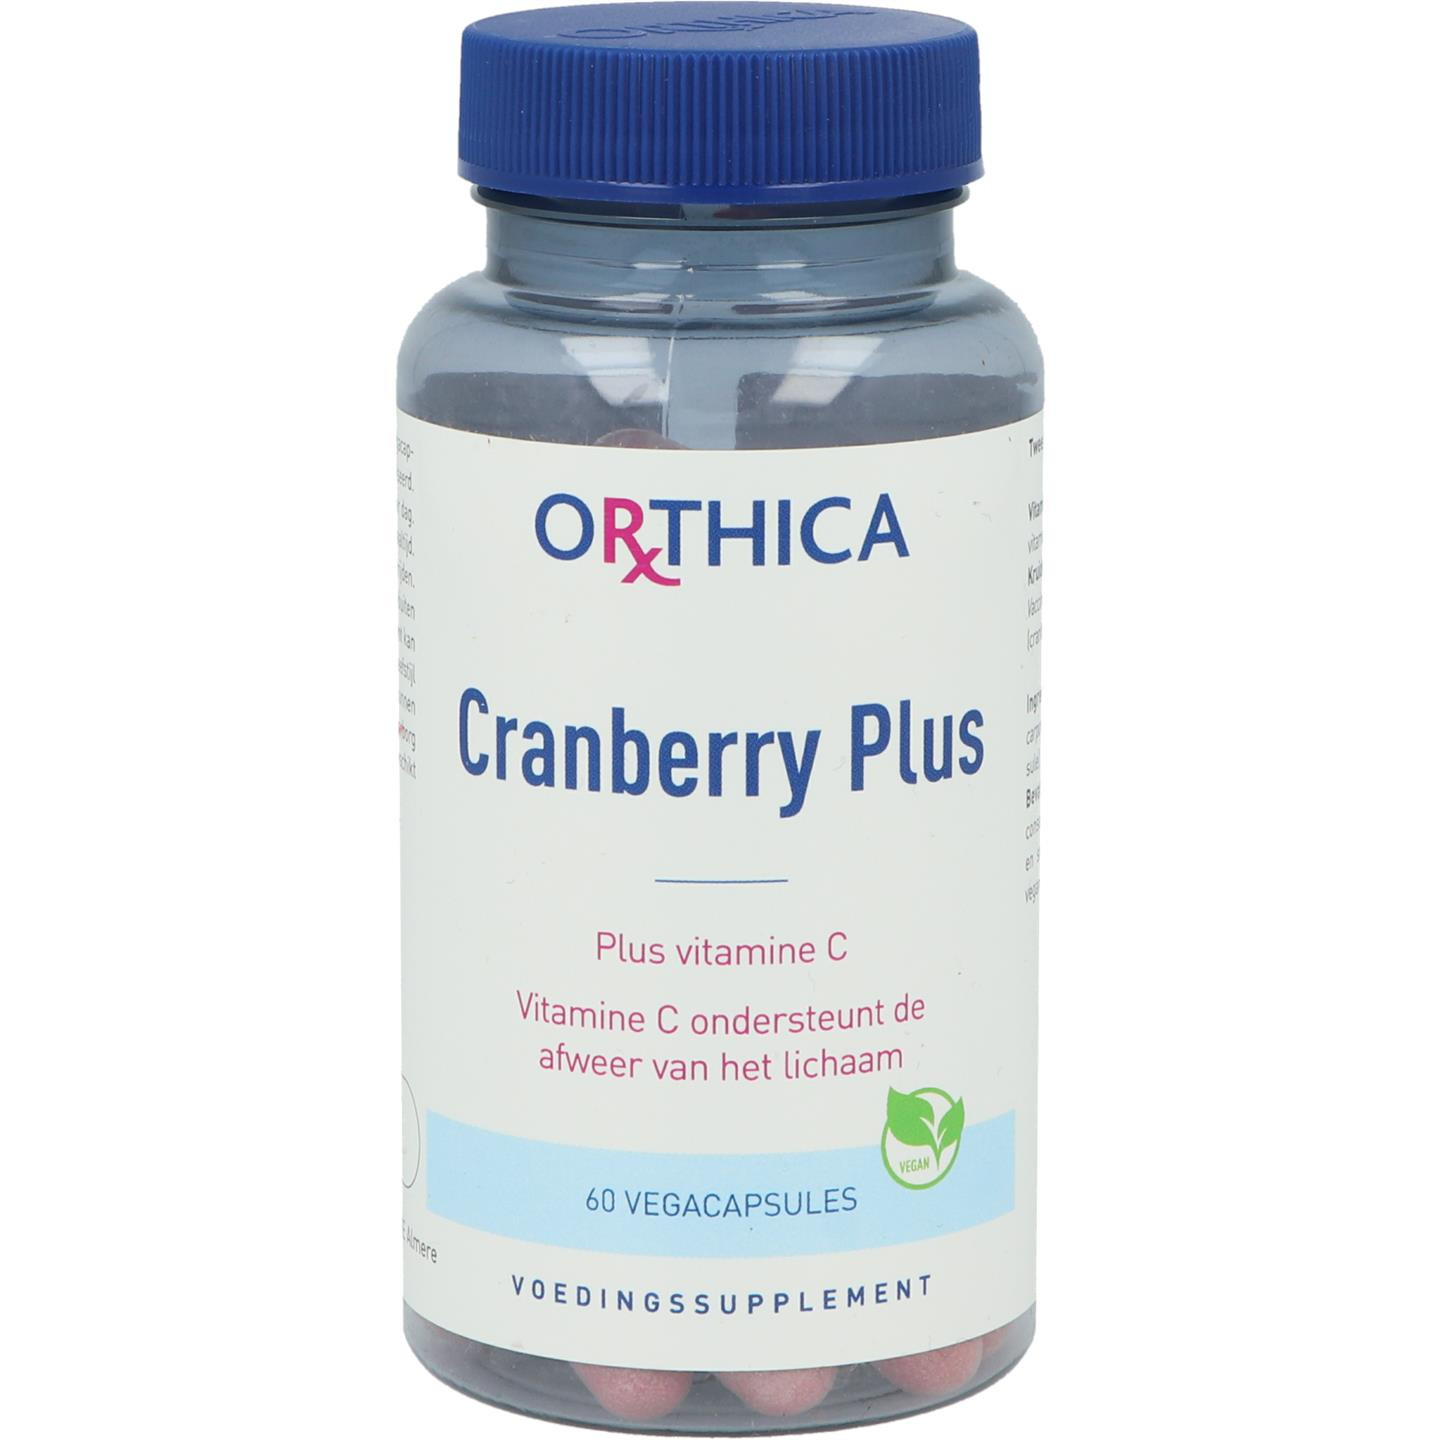 Cranberry Plus